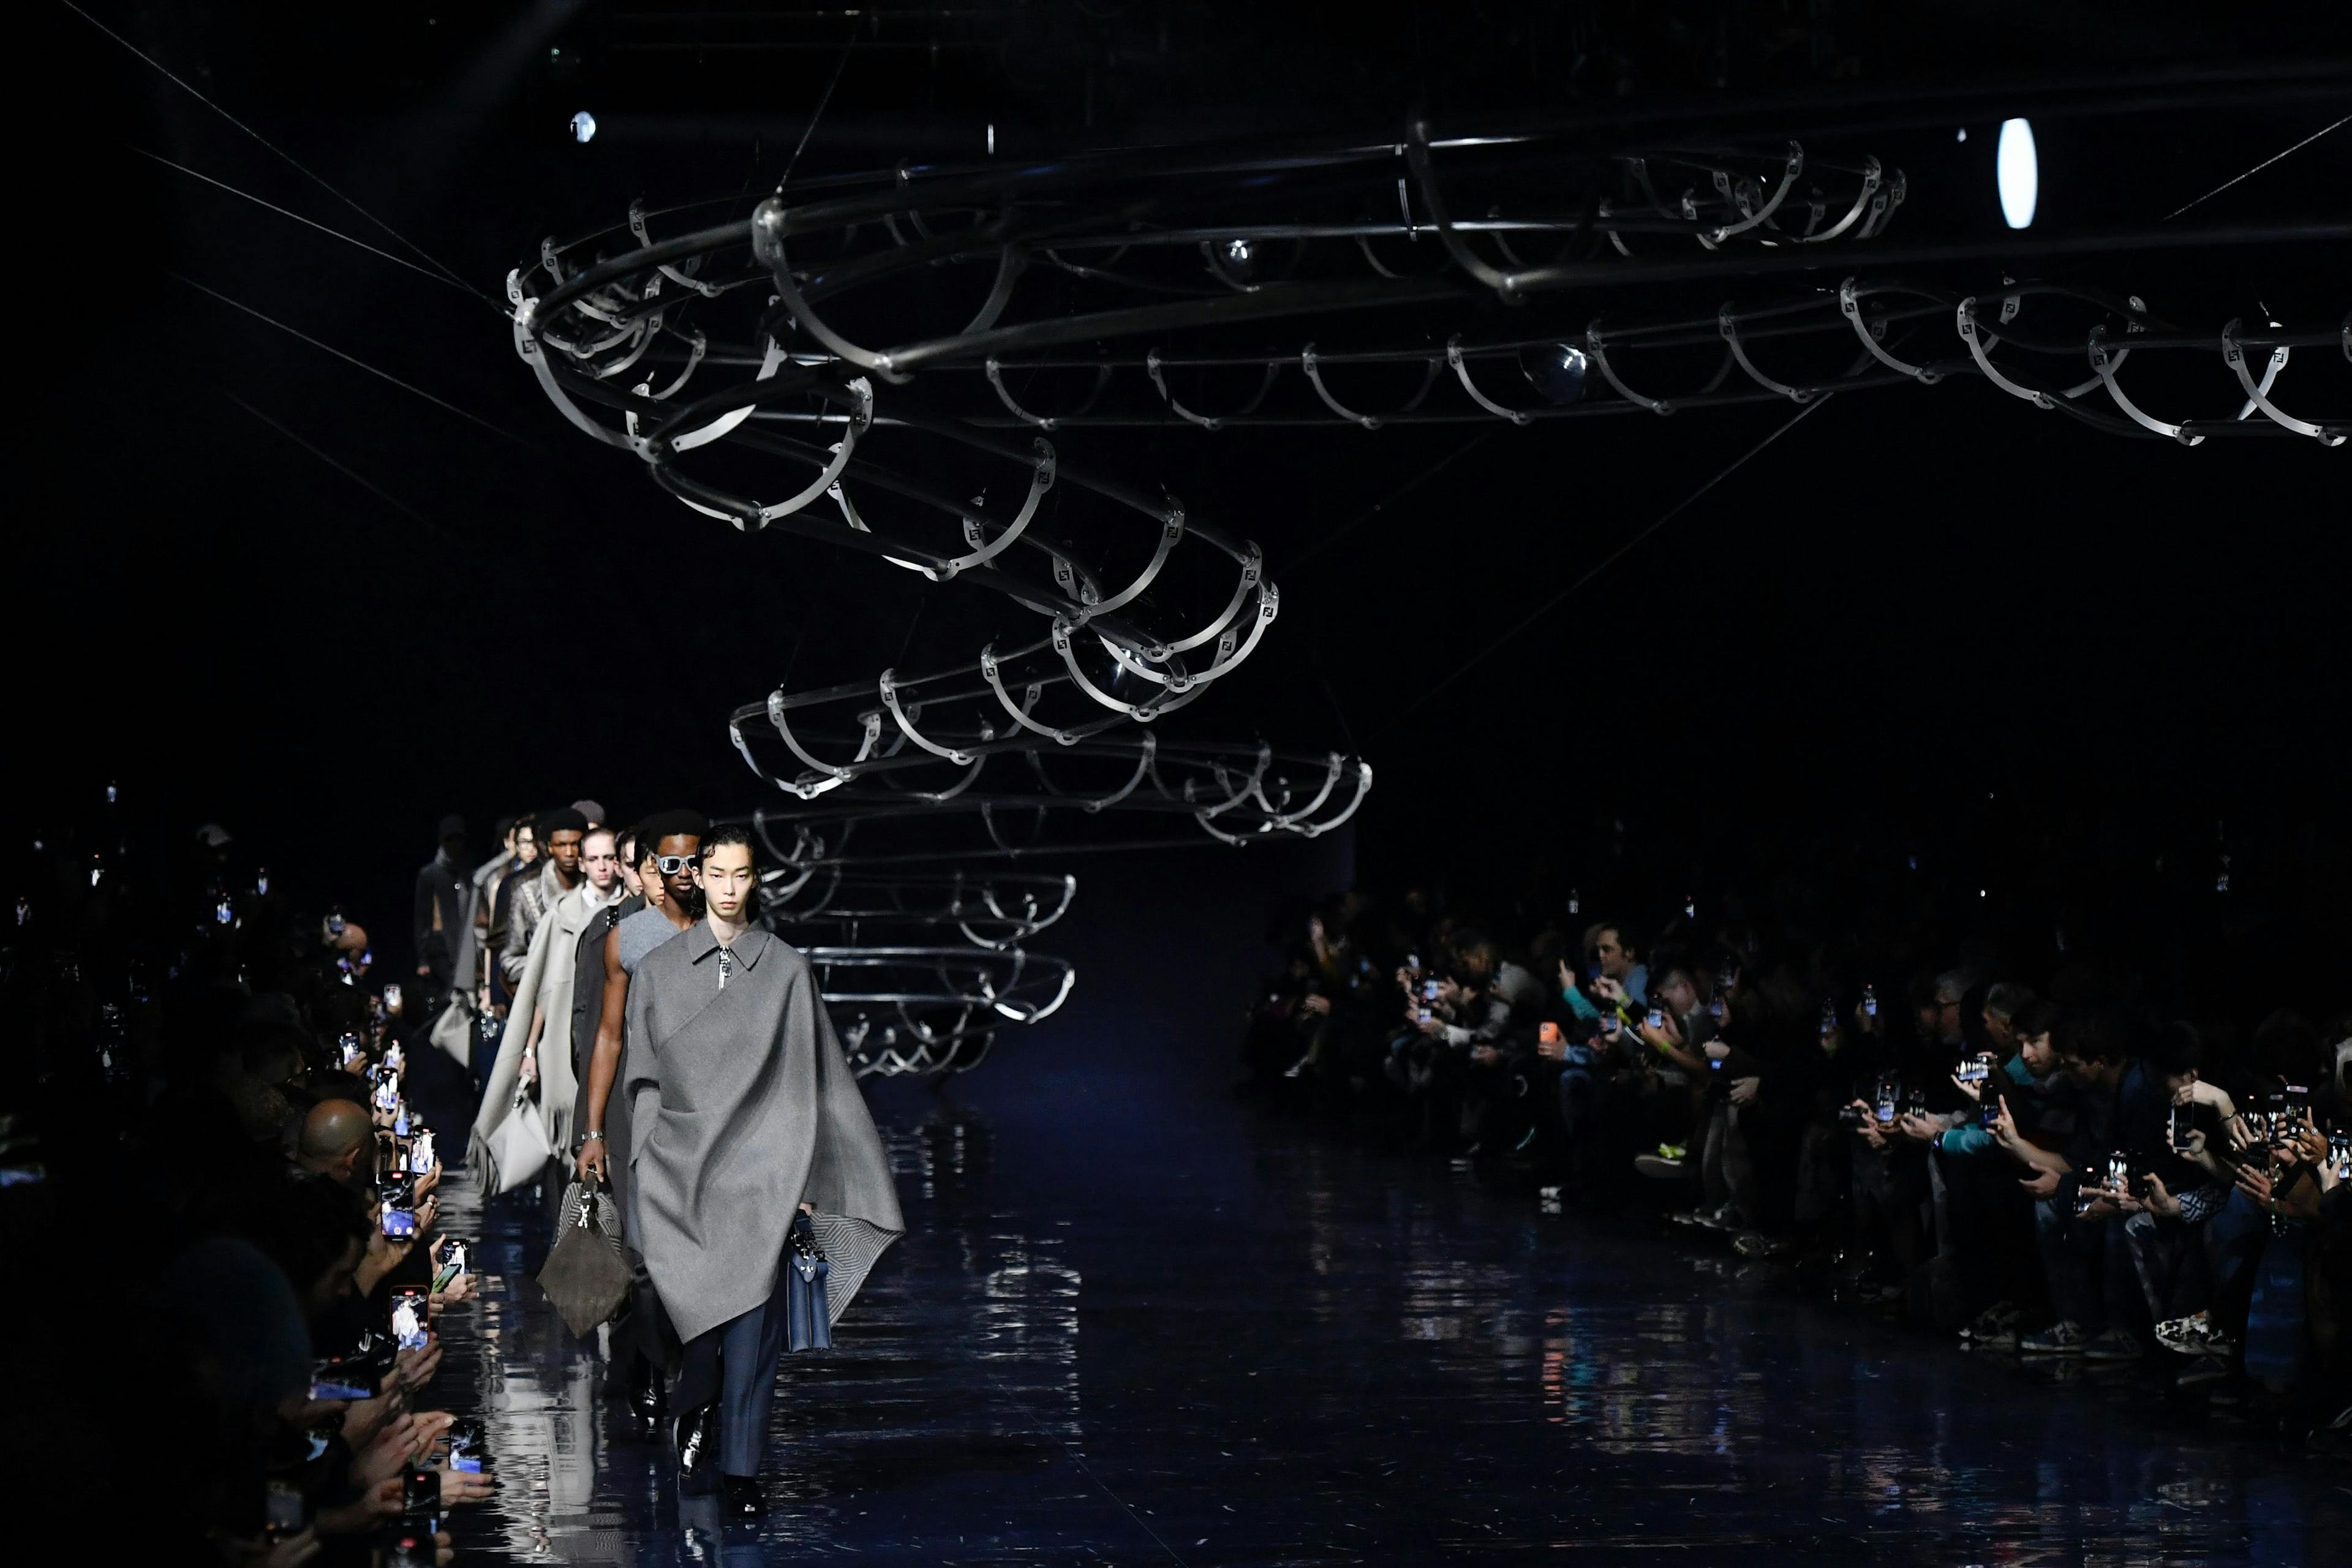 milan coat handbag fashion lighting person people shoe glasses overcoat crowd